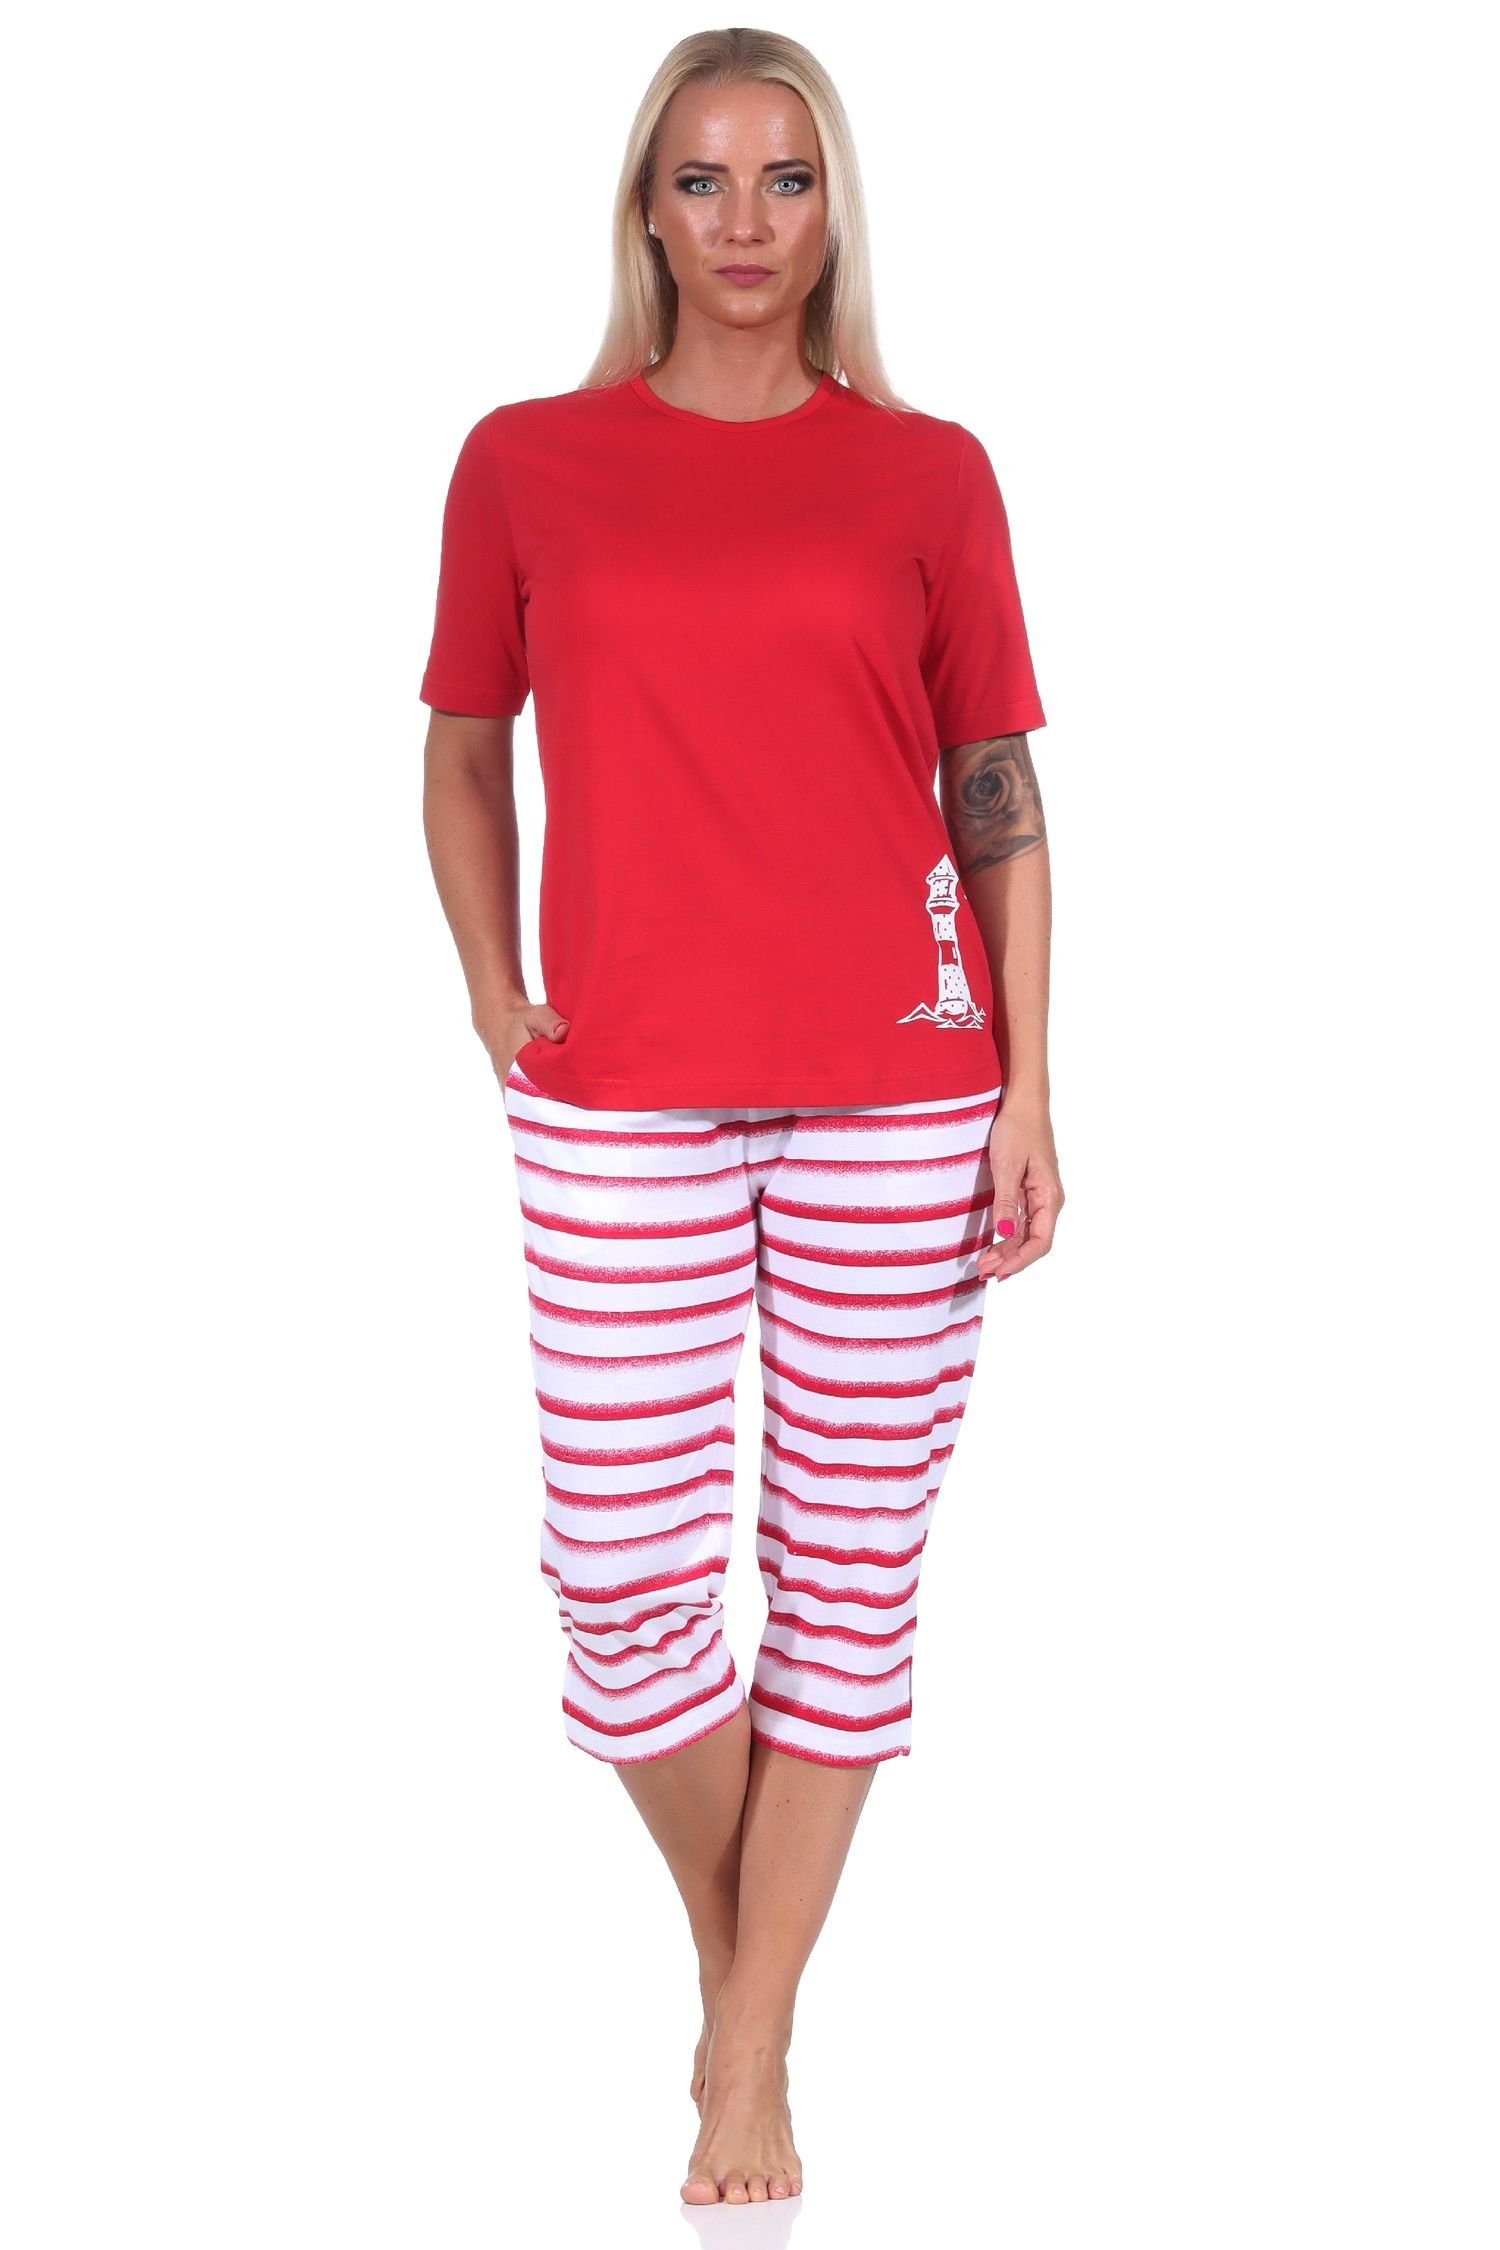 Damen Motiv kurzarm Leuchtturm rot Capri mit Maritimer Top Schlafanzug, Normann Pyjama